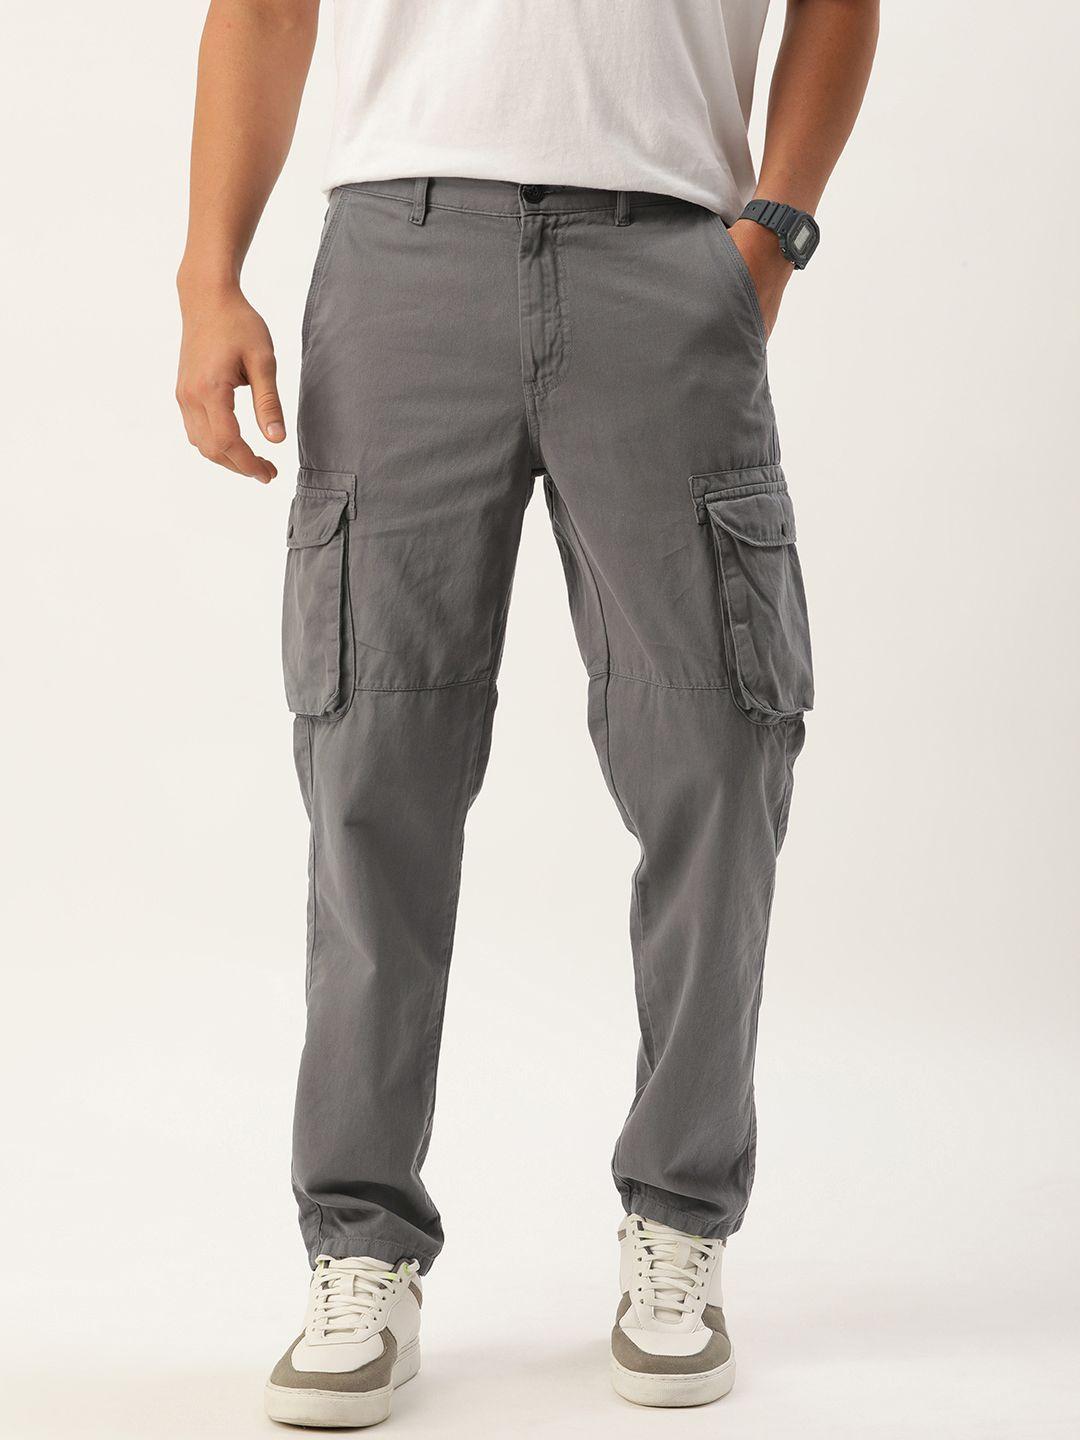 ivoc-men-solid-cotton-cargos-trousers